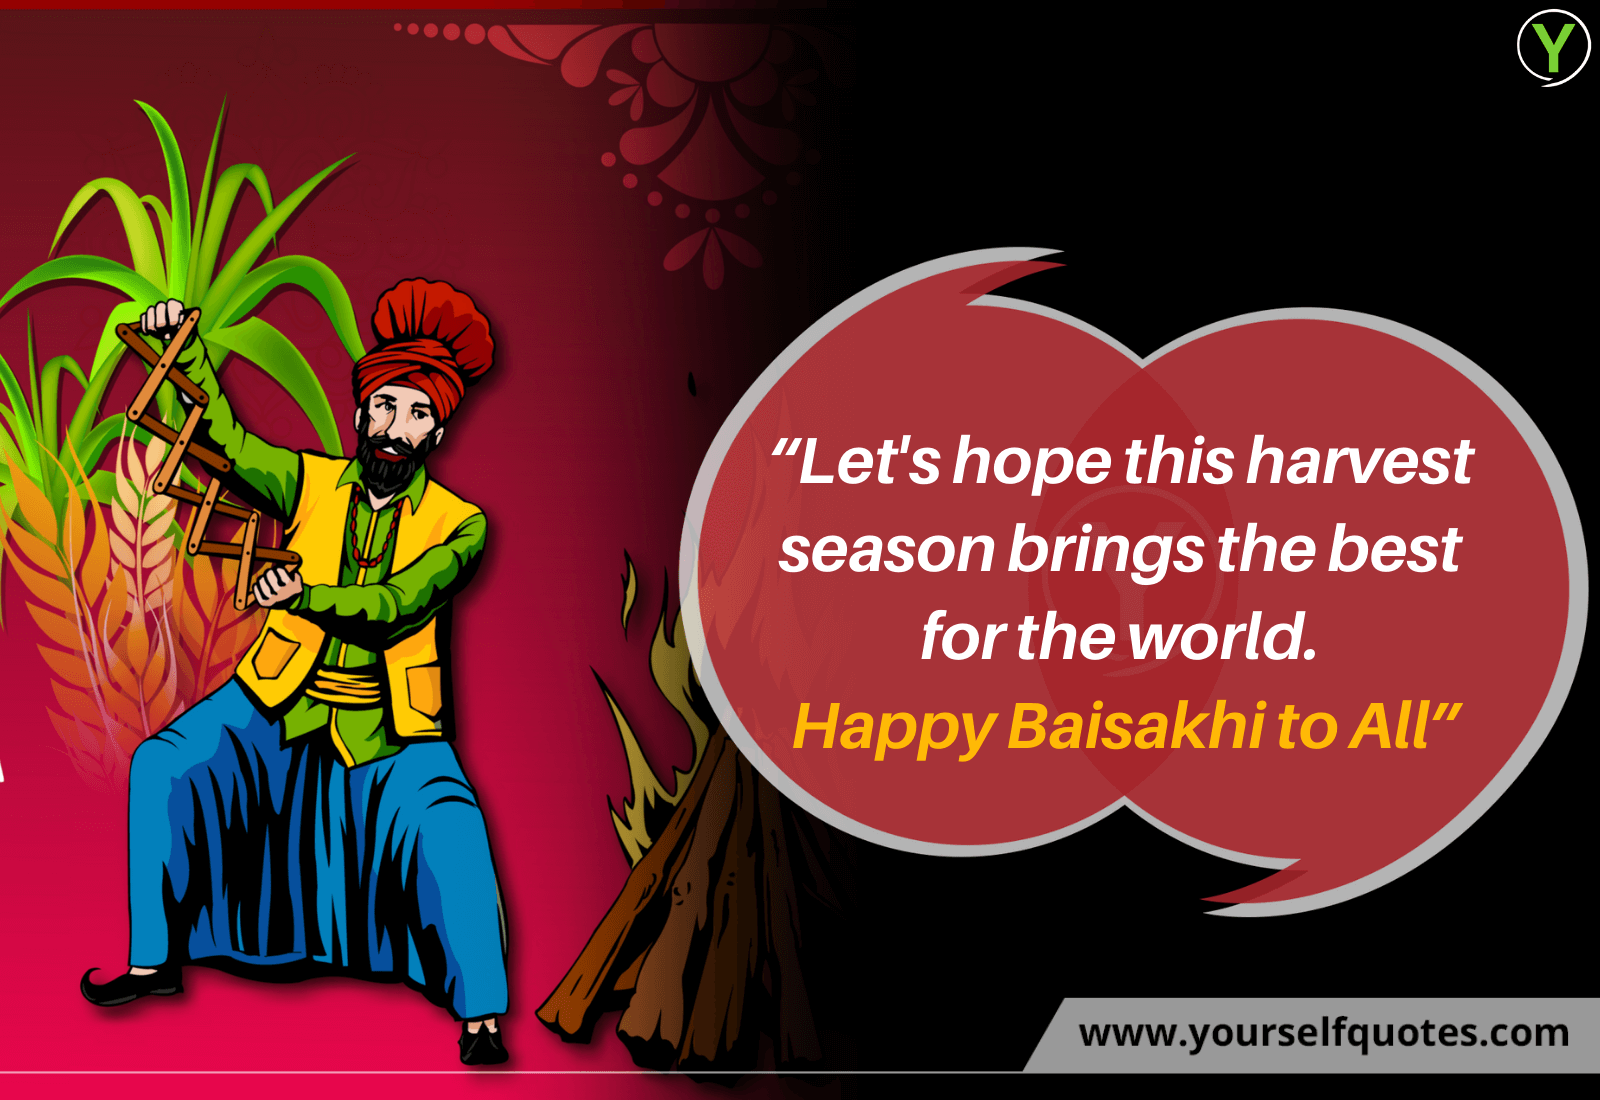 Happy Baisakhi Quotes Images